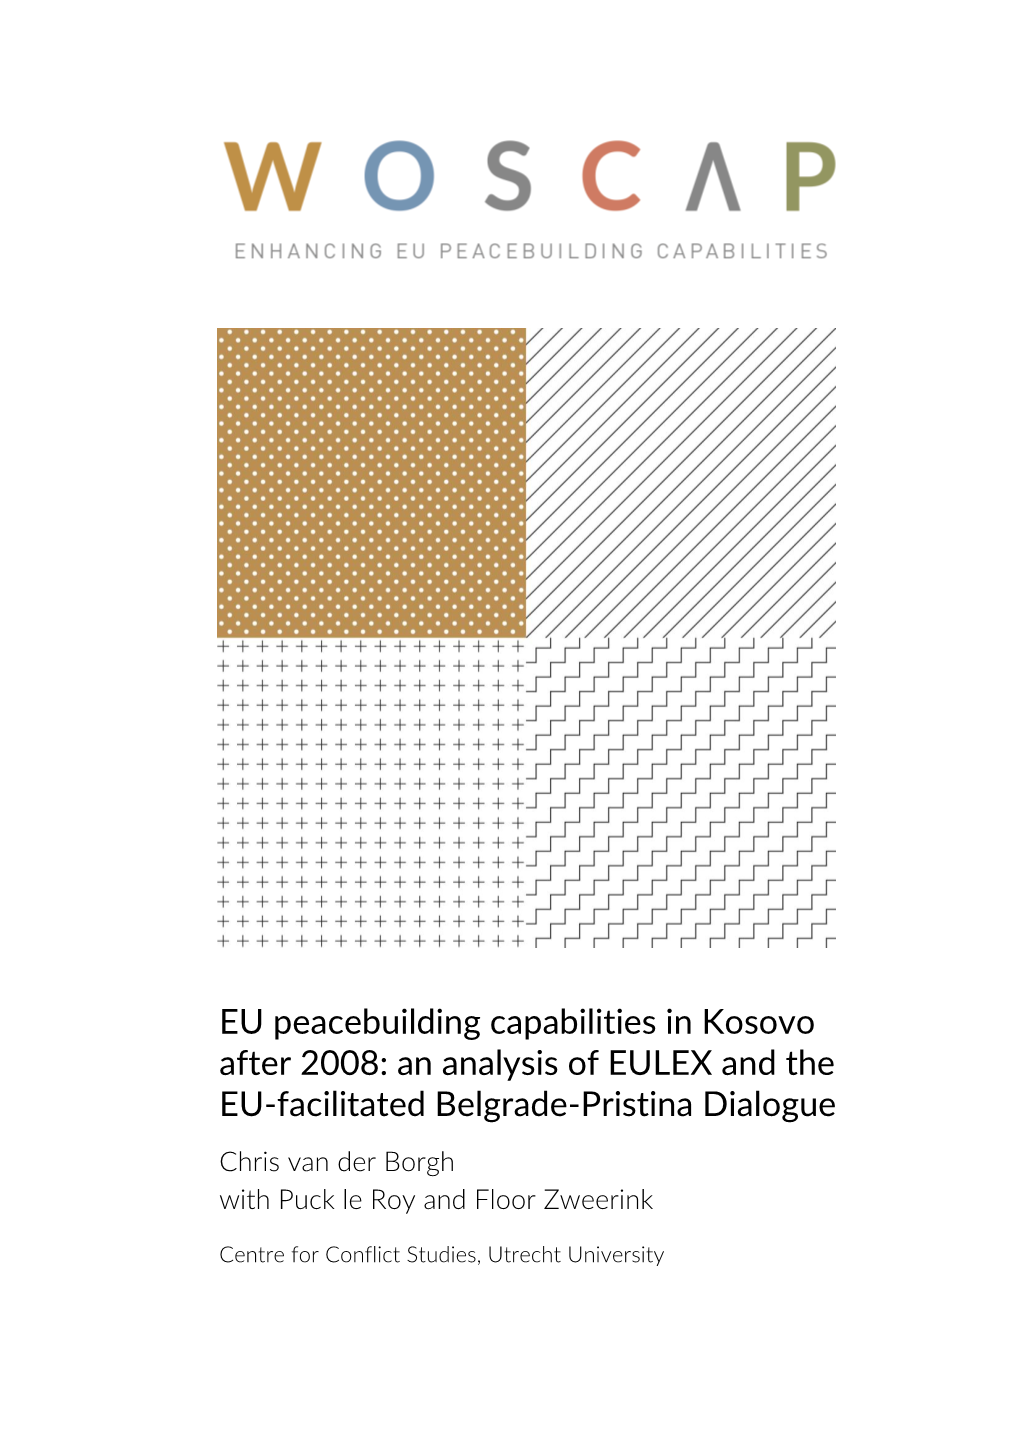 EU Peacebuilding Capabilities in Kosovo After 2008